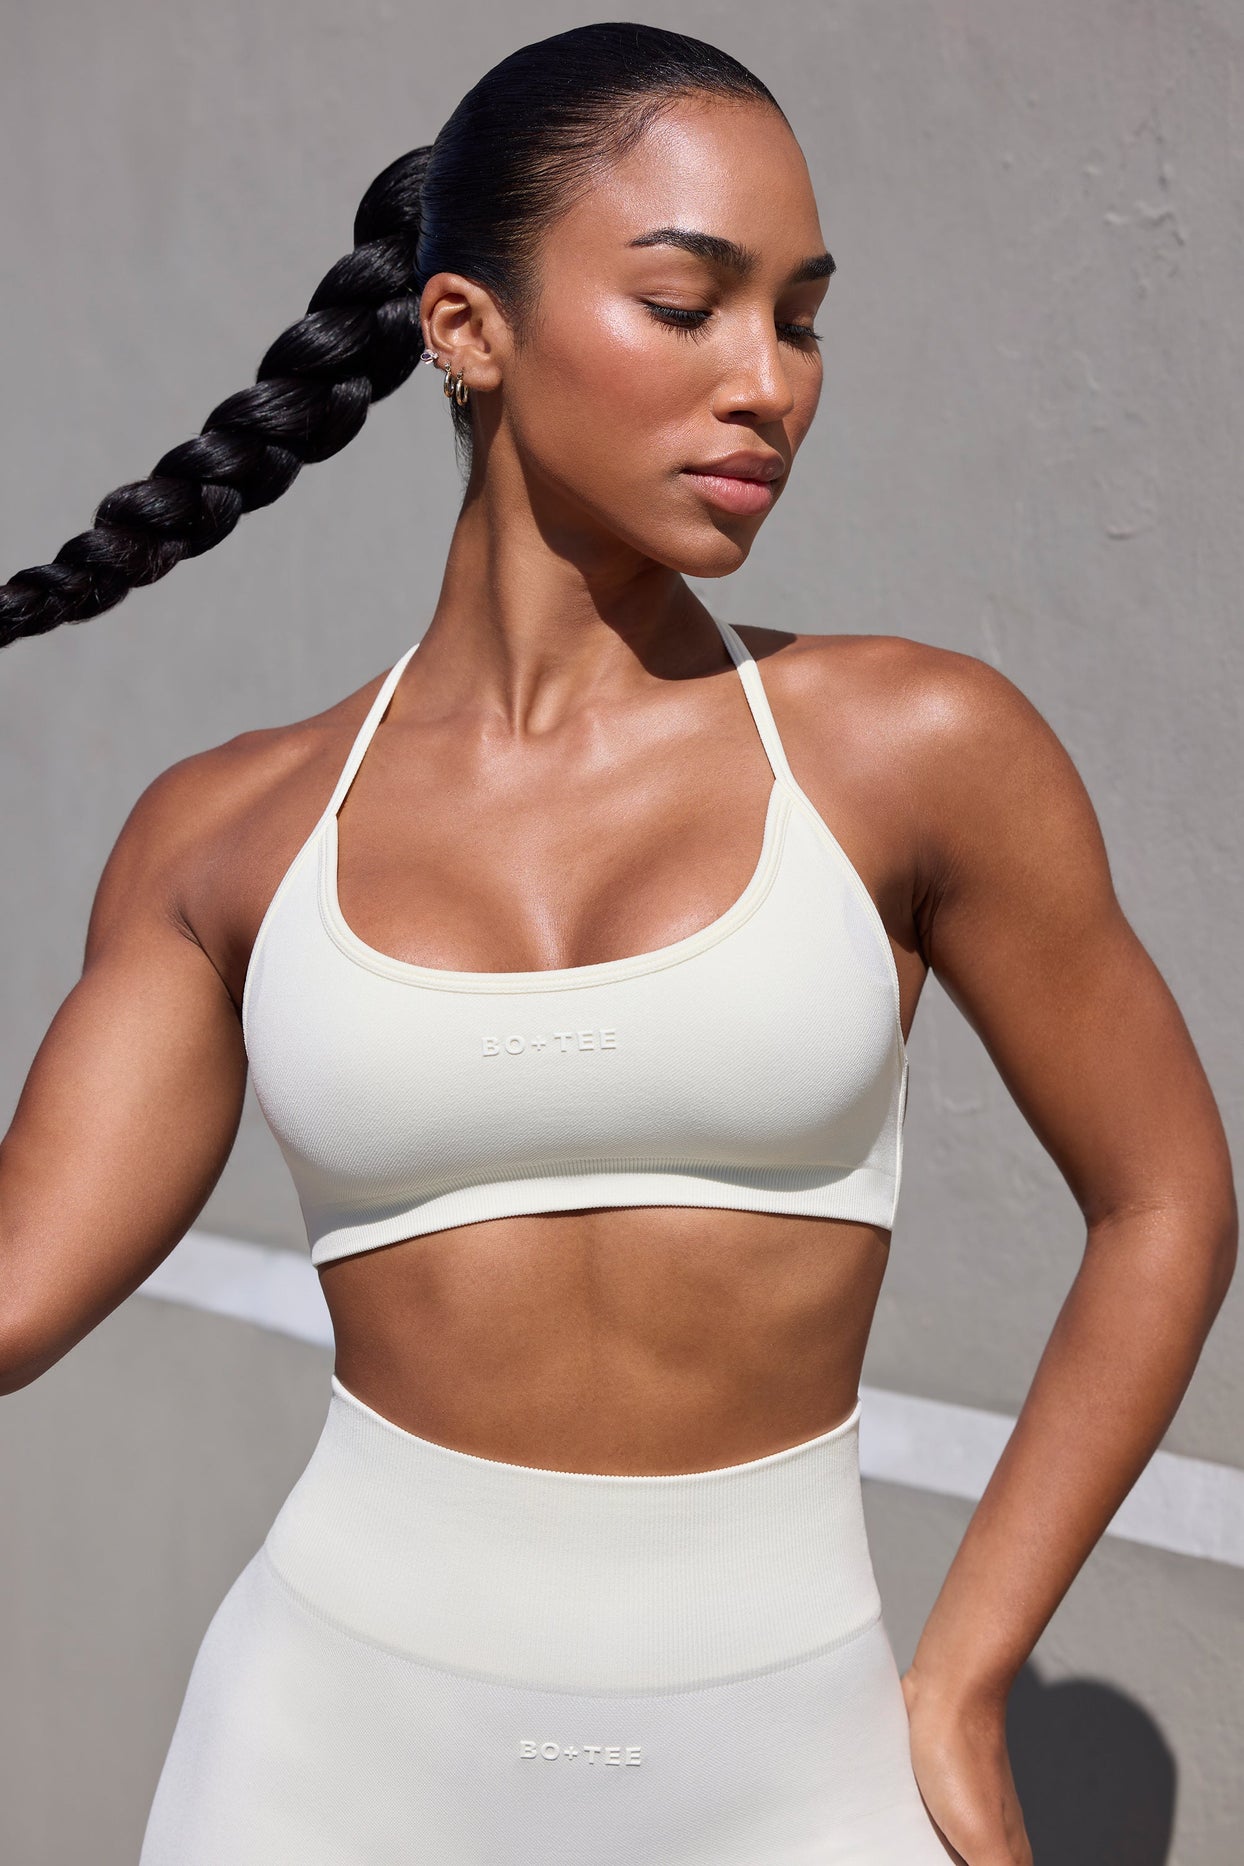 bo+tee no sweat sports bra in cream, Women's Fashion, Activewear